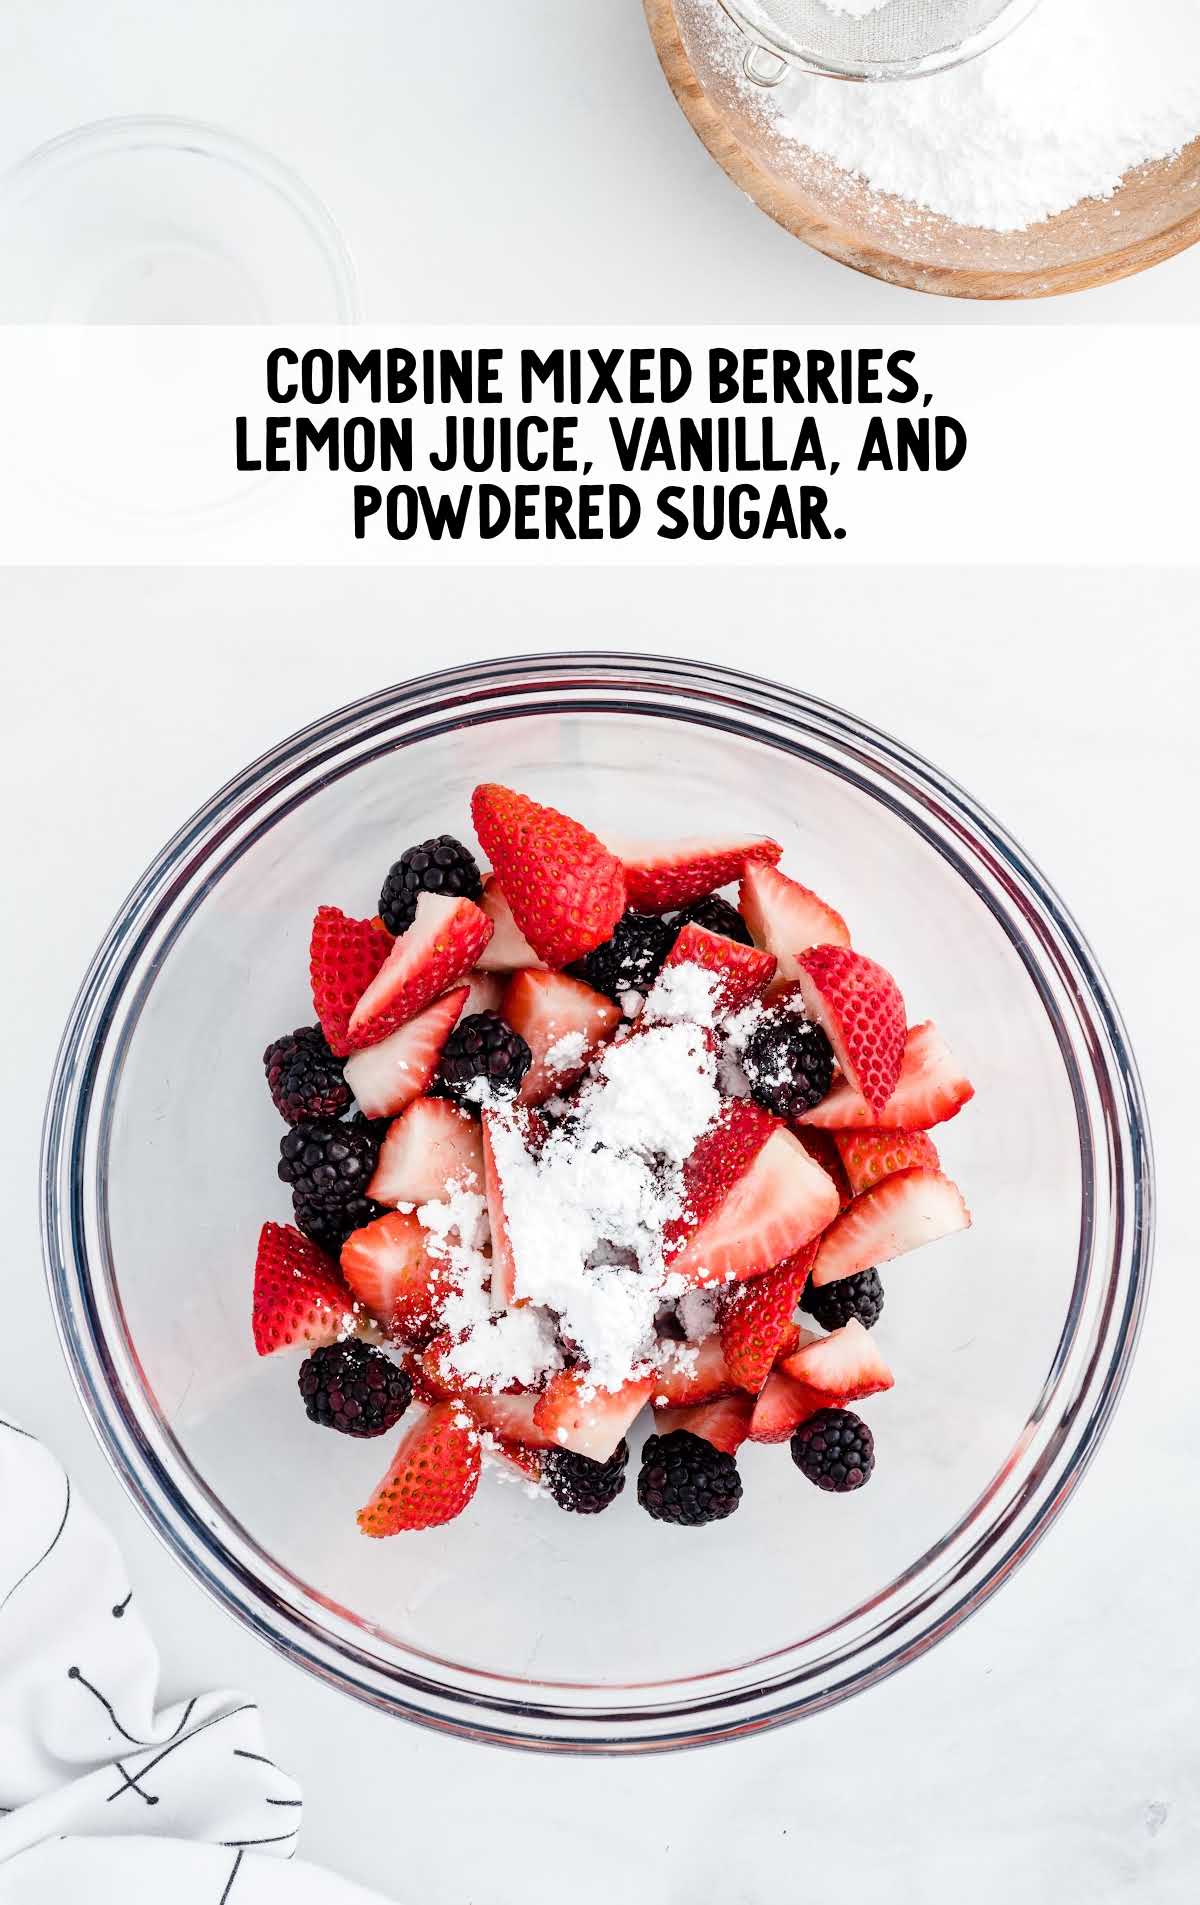 mixed berries, lemon juice, vanilla, and powdered sugar added to a bowl